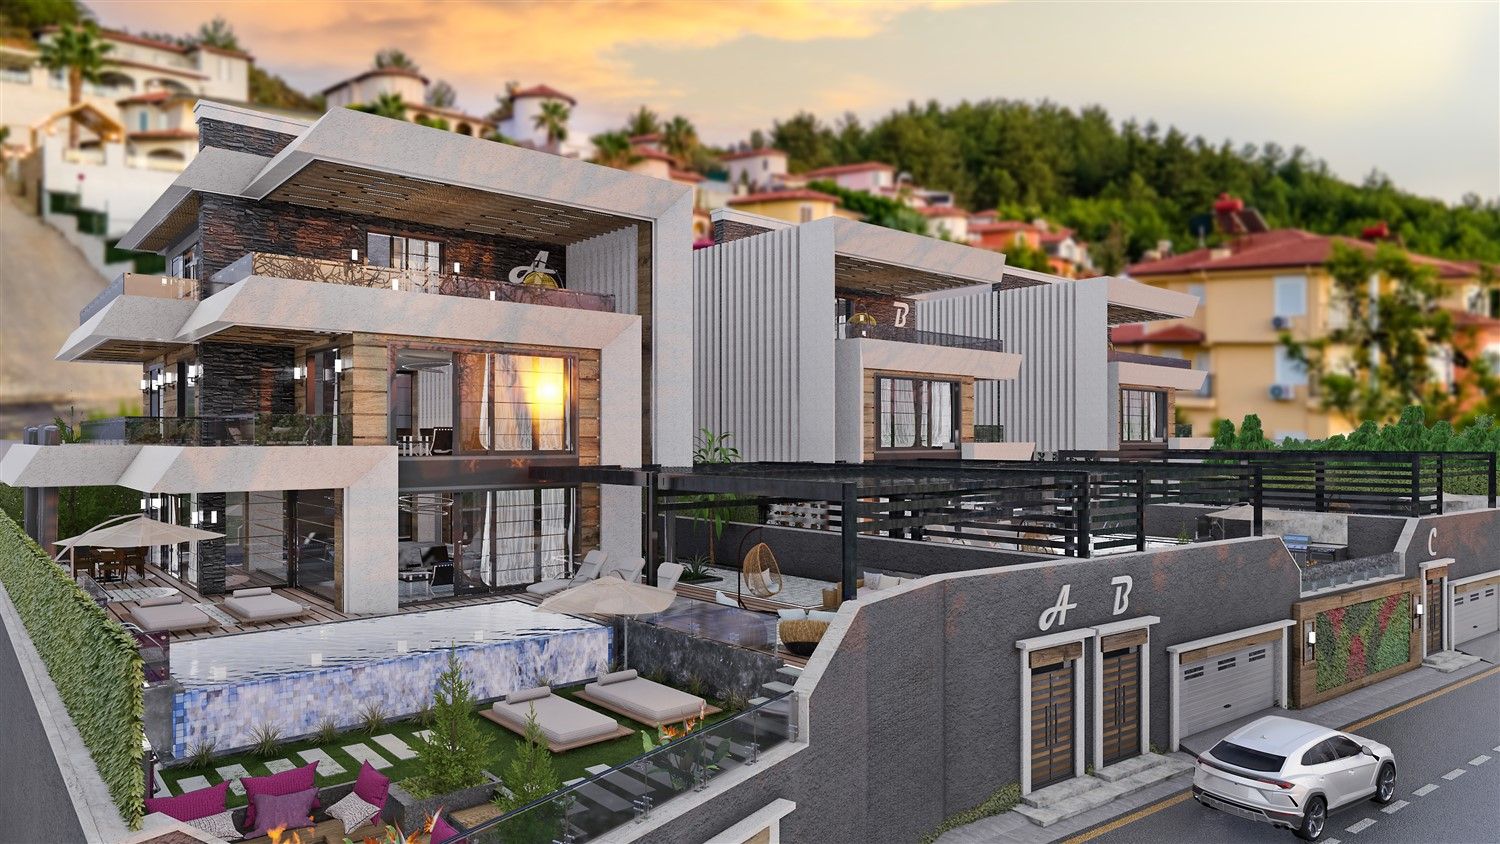 Premium villa project under construction in Kargicak district